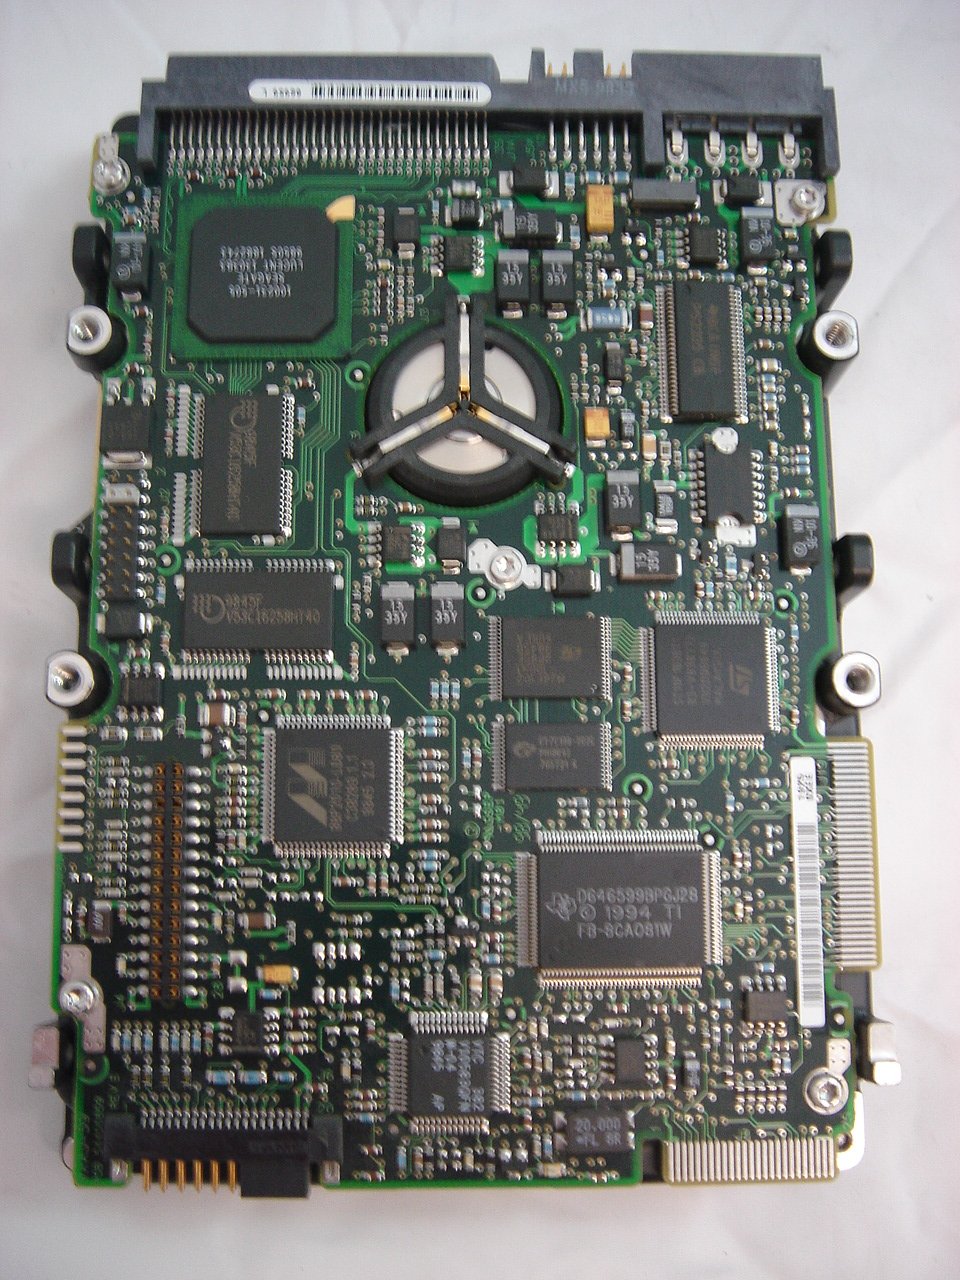 9K8005-001 - Seagate 4.5Gb SCSI 68 Pin 10Krpm 3.5in HDD - USED